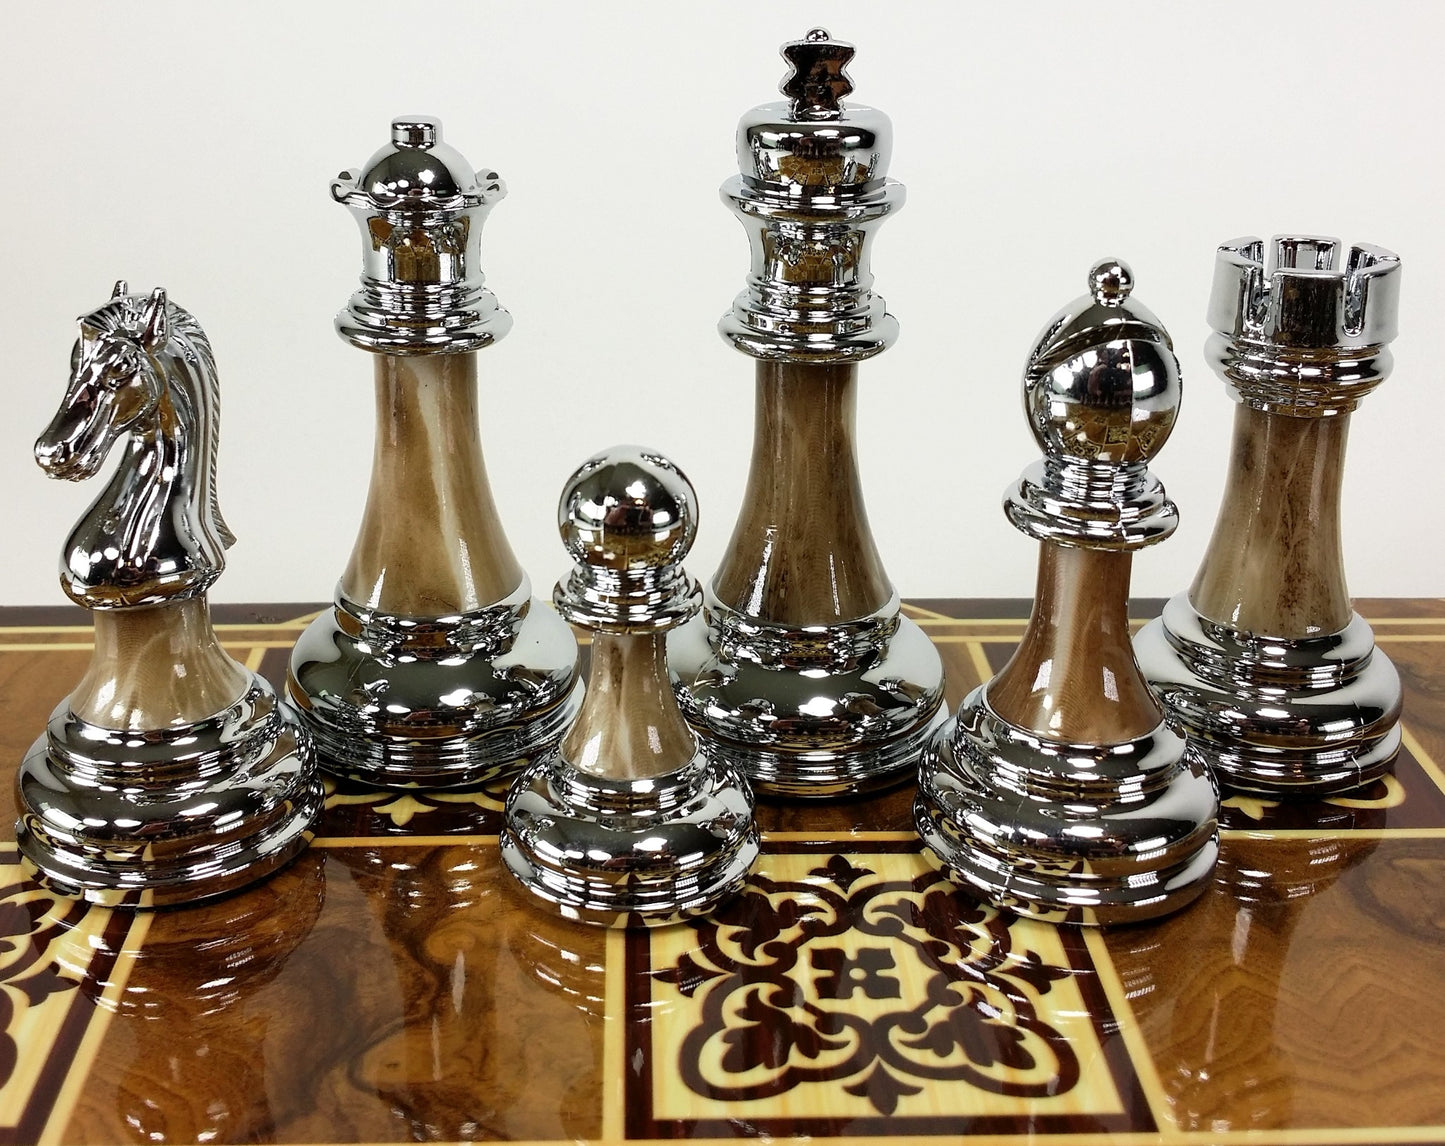 Staunton Chrome & Black Pro Plastic Chess Men Set W 17" Burlwood Color Board